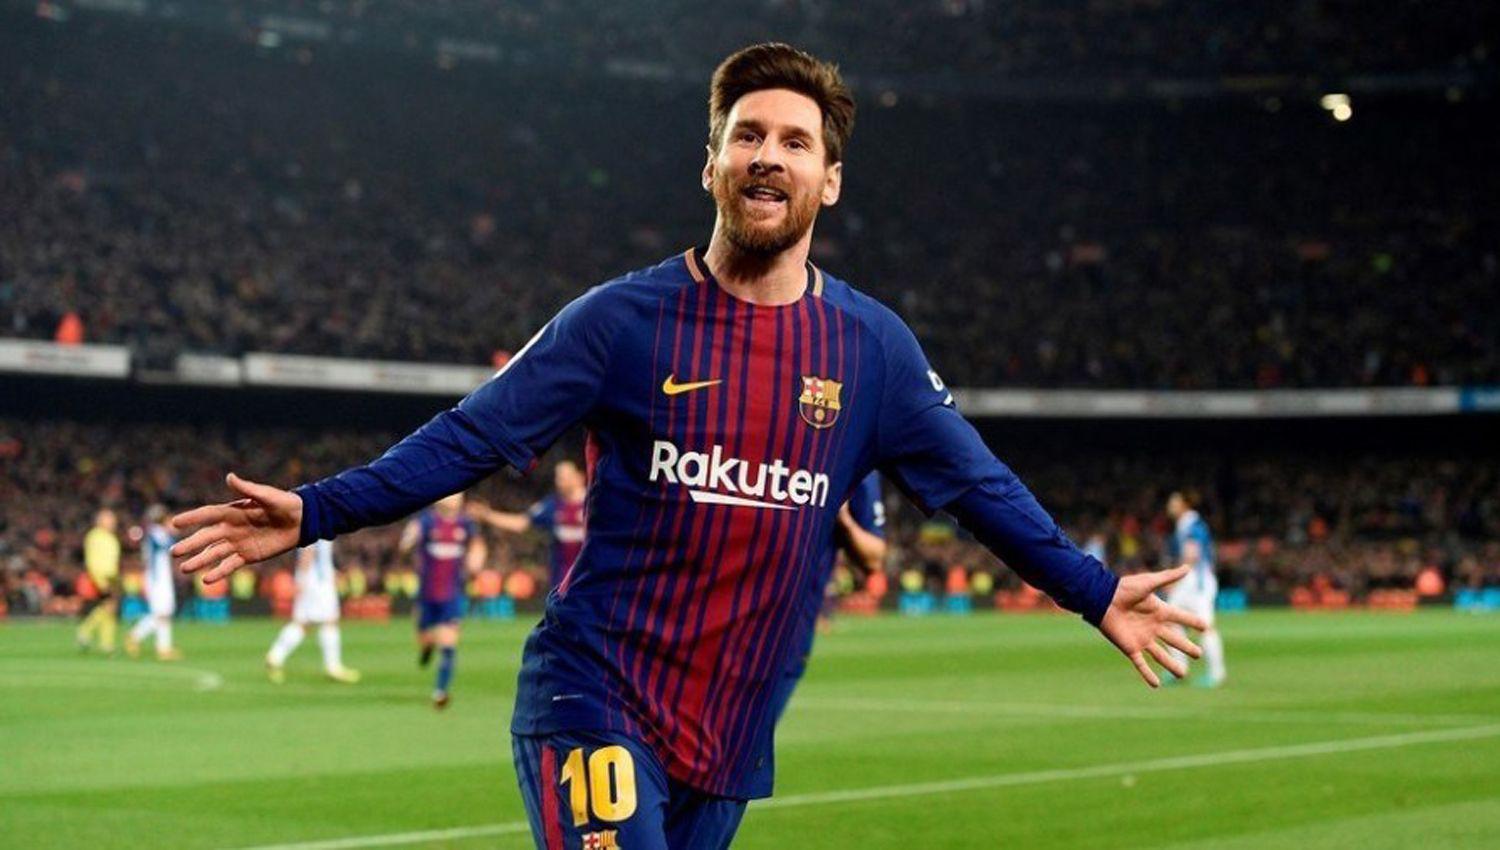 Lionel Messi va por un reacutecord de Peleacute